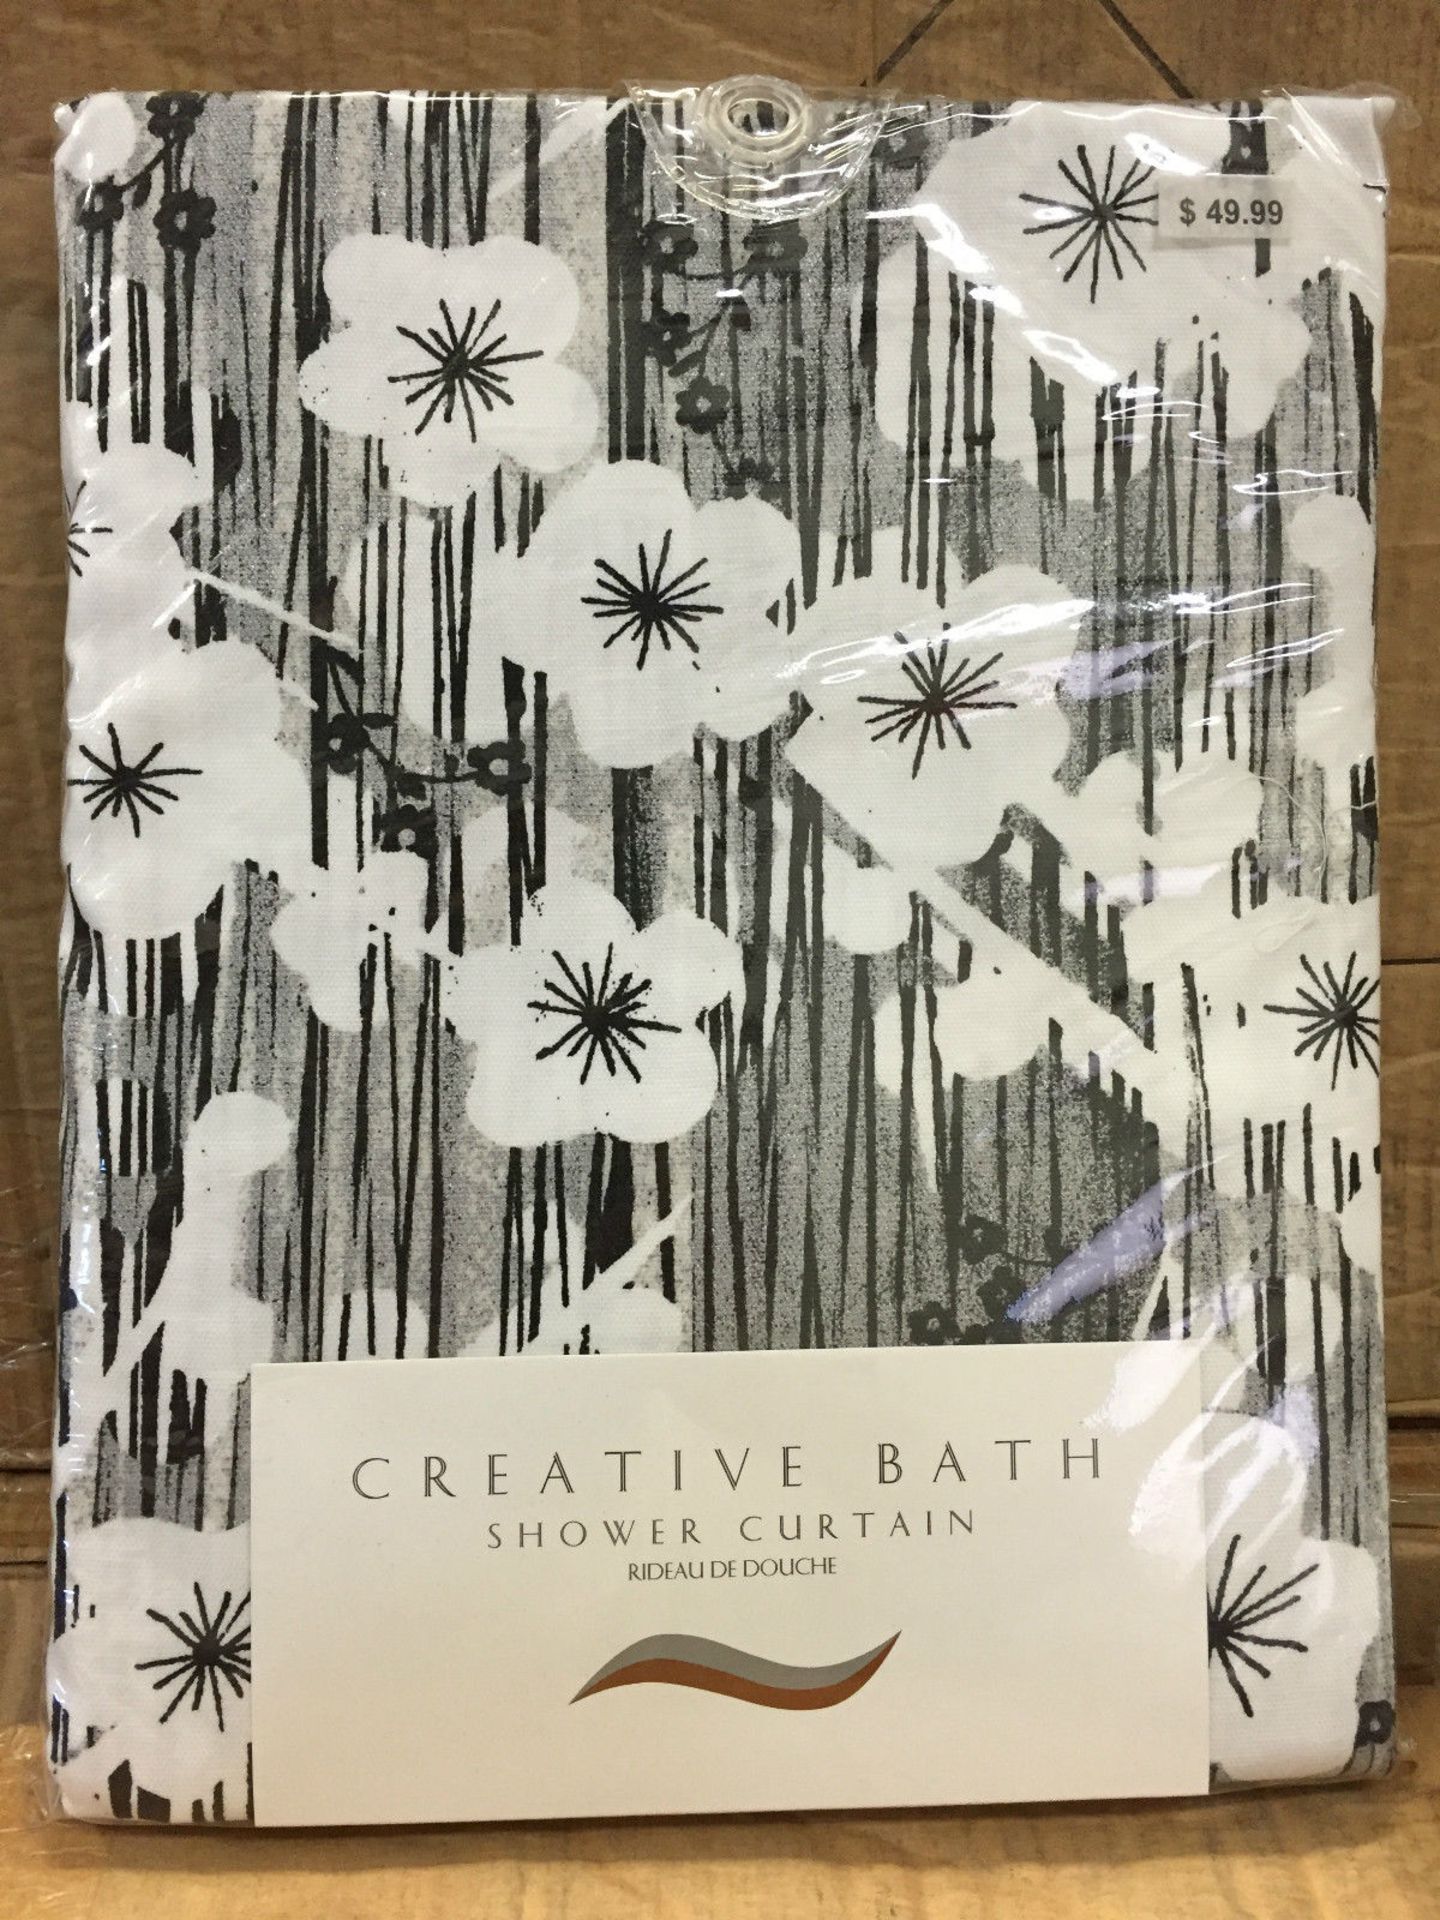 100 x Creative Bath Blossoms Shower Curtain (Black and White) 72 x 72 Retail $49.99